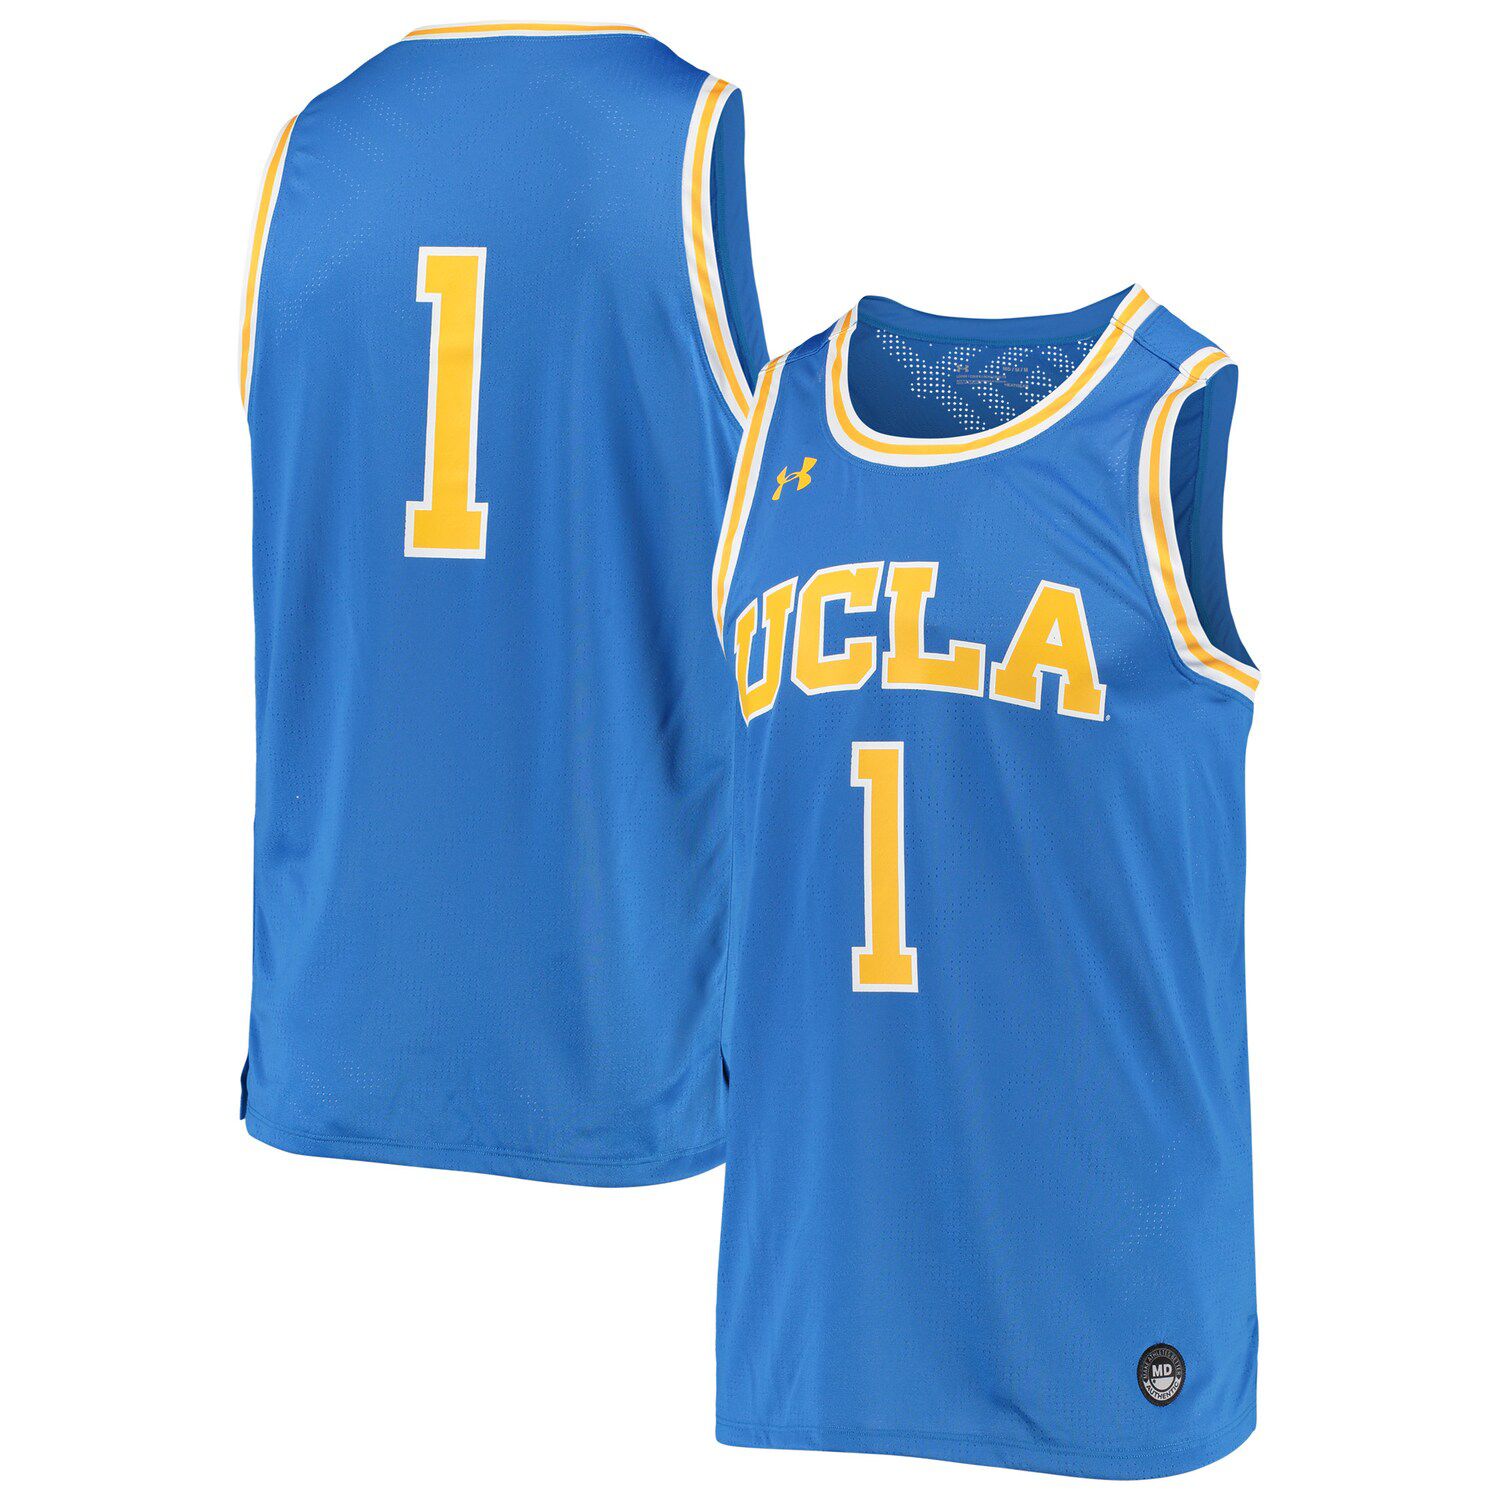 ucla men's basketball jersey